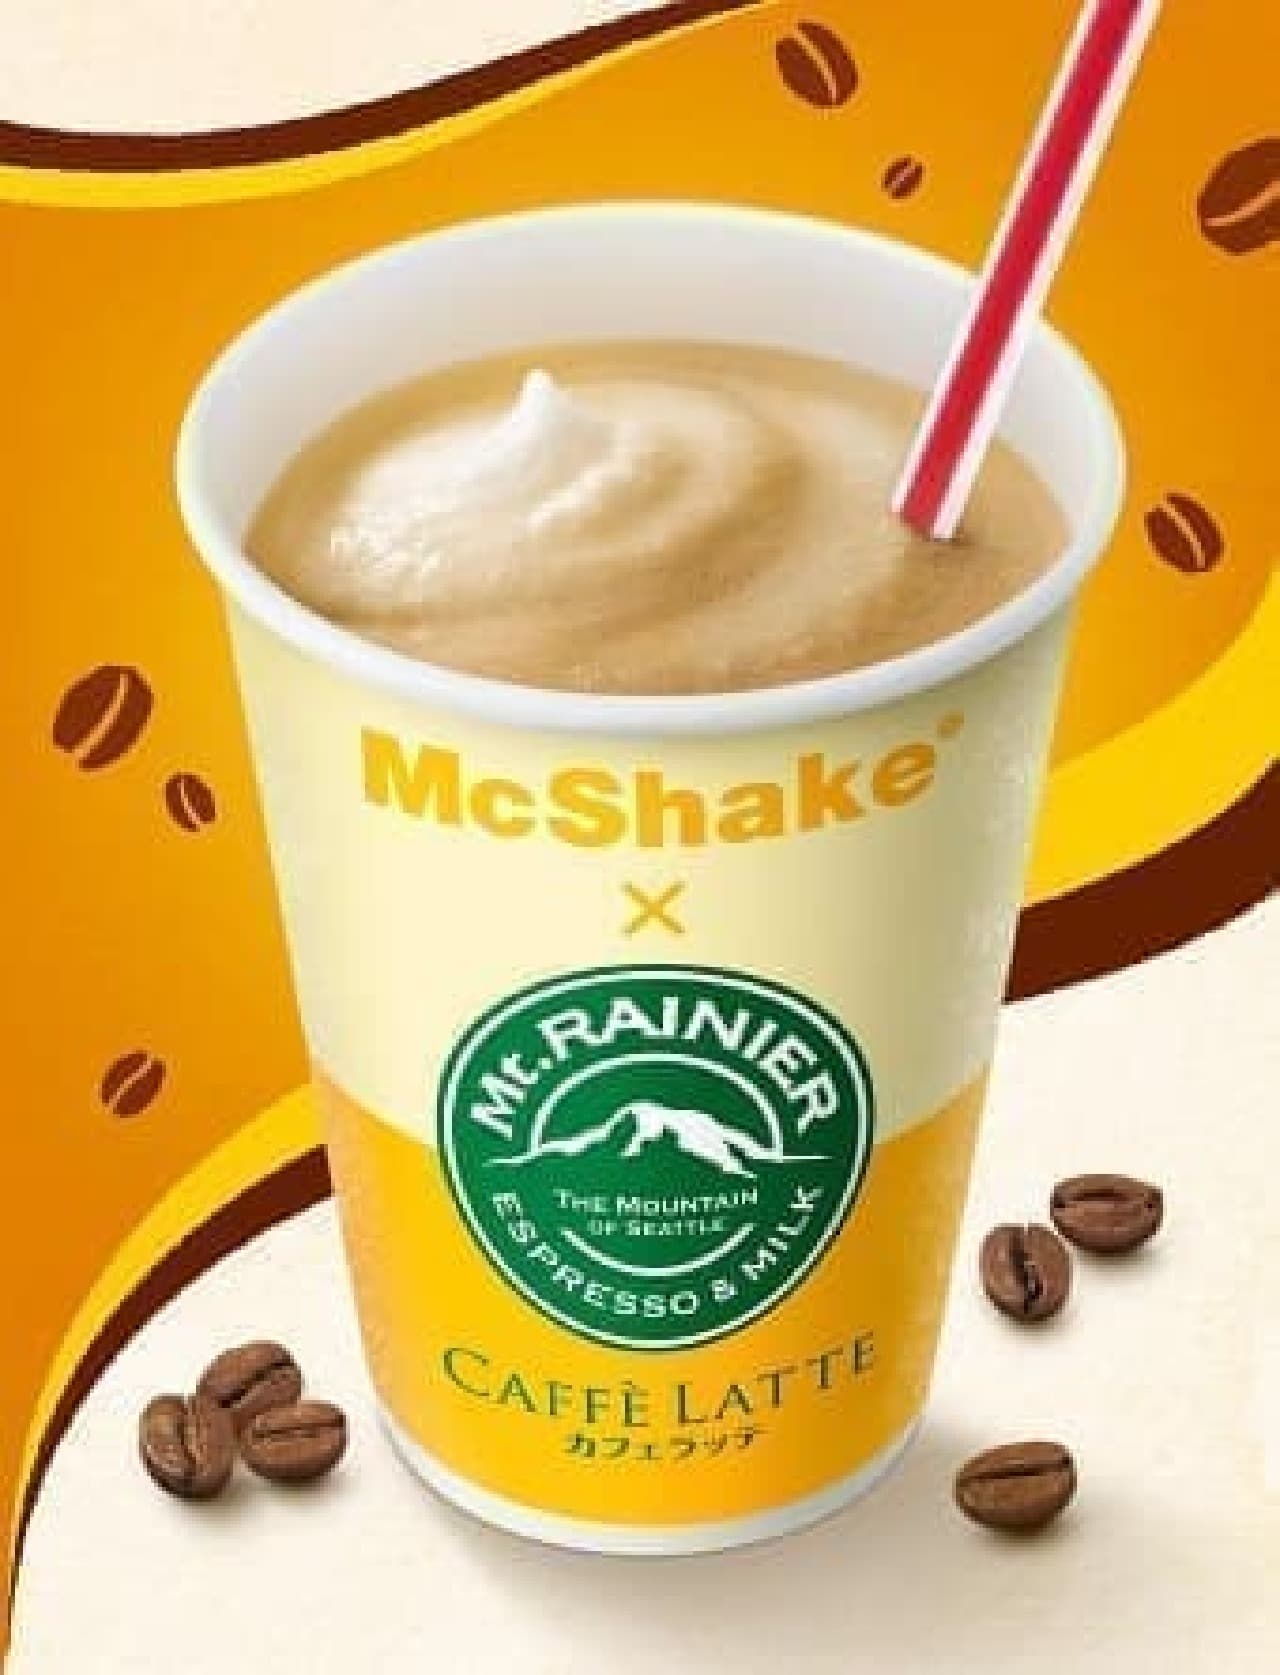 McShake x Mount Rainier Cafe Latte Flavor